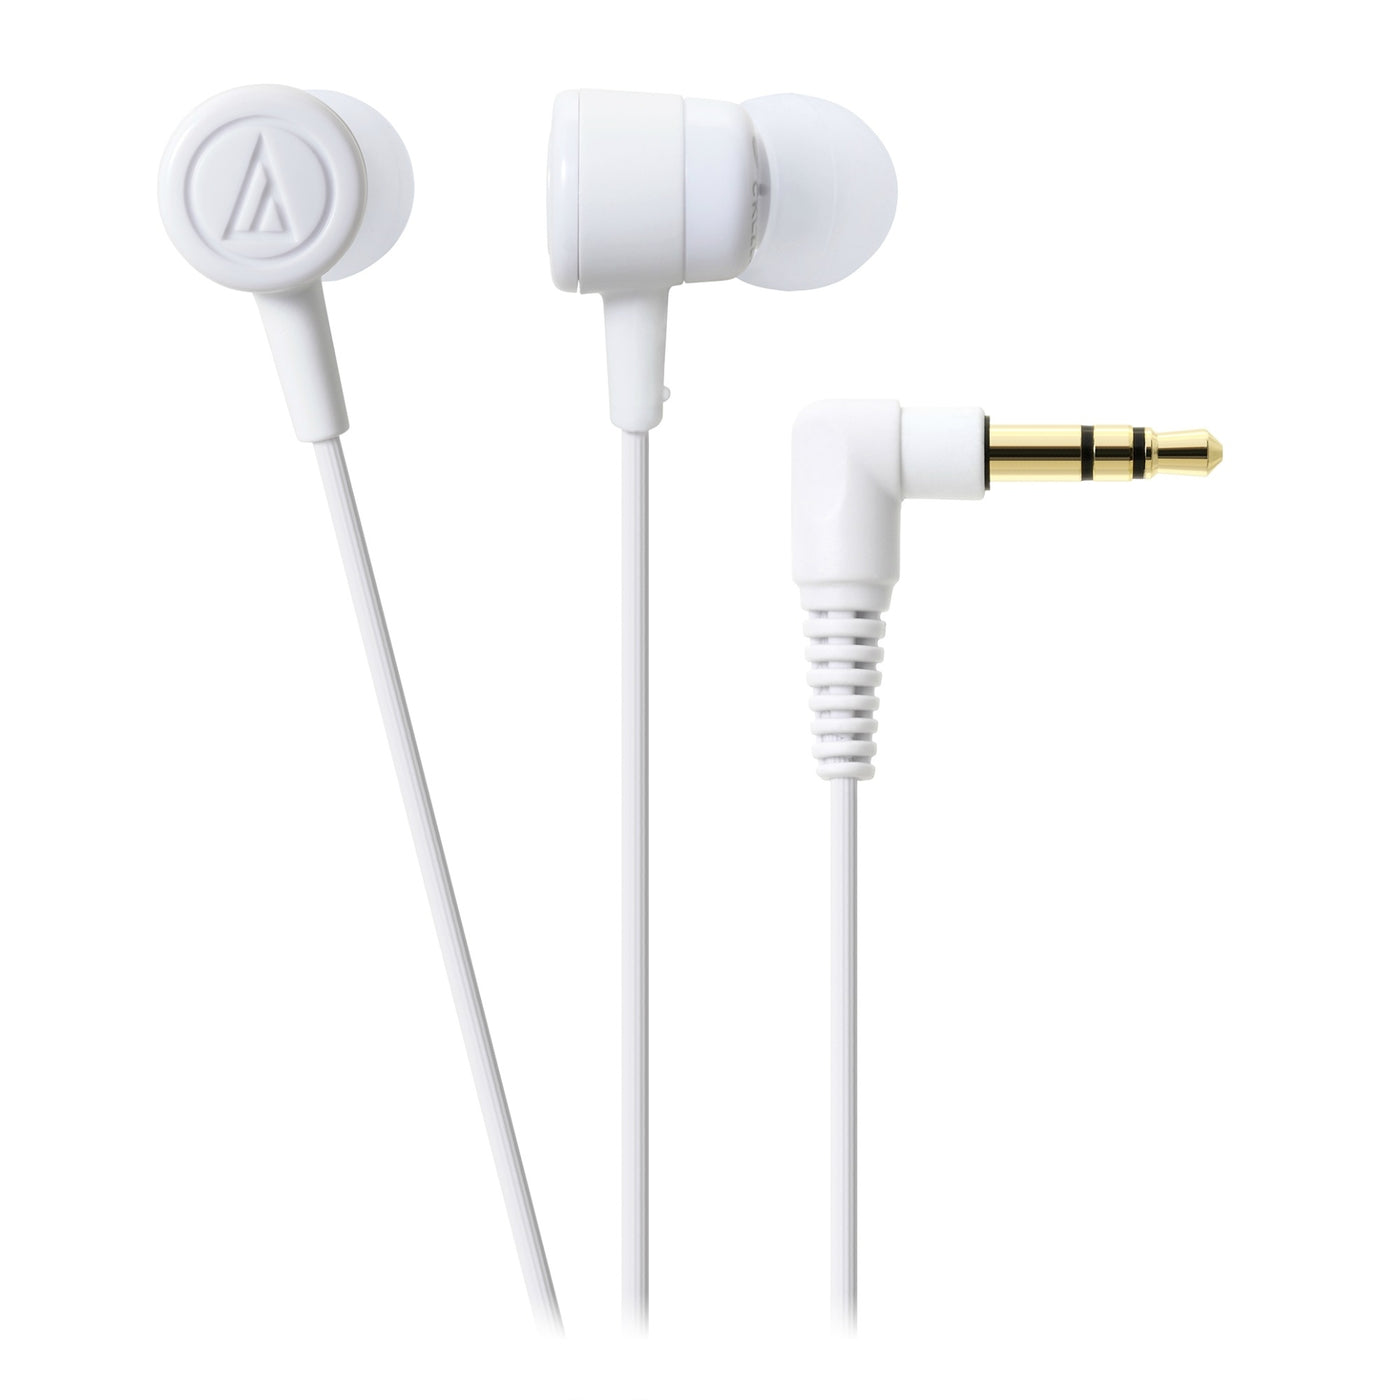 Audio-Technica ATH-CKL220 'DIP' in-ear headphones in neon colours